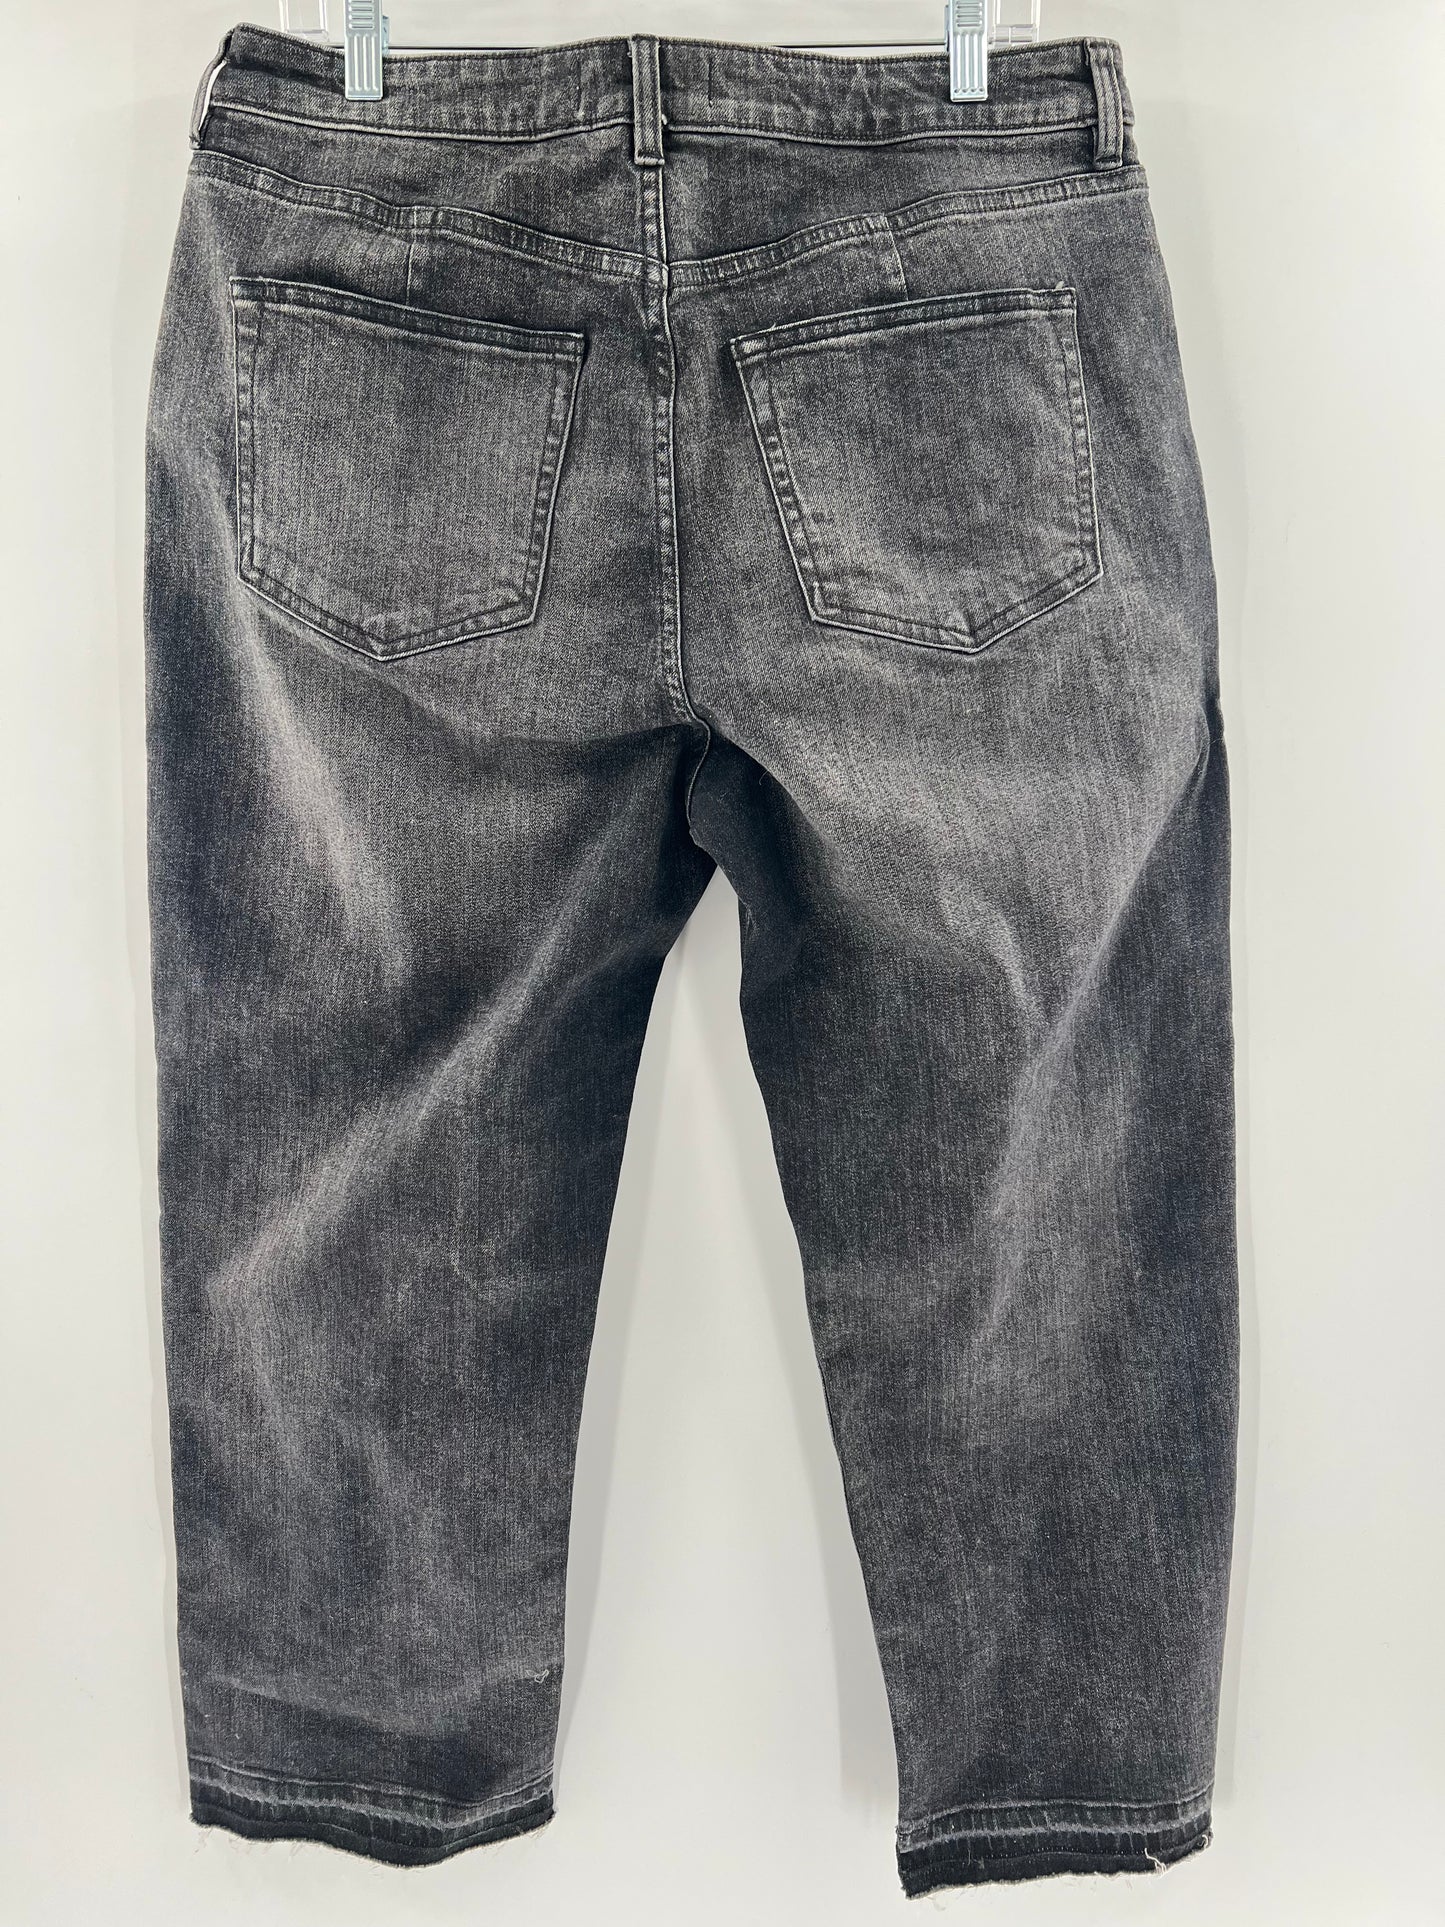 Black/Gray Free People Curvy Jeans (Size 33)